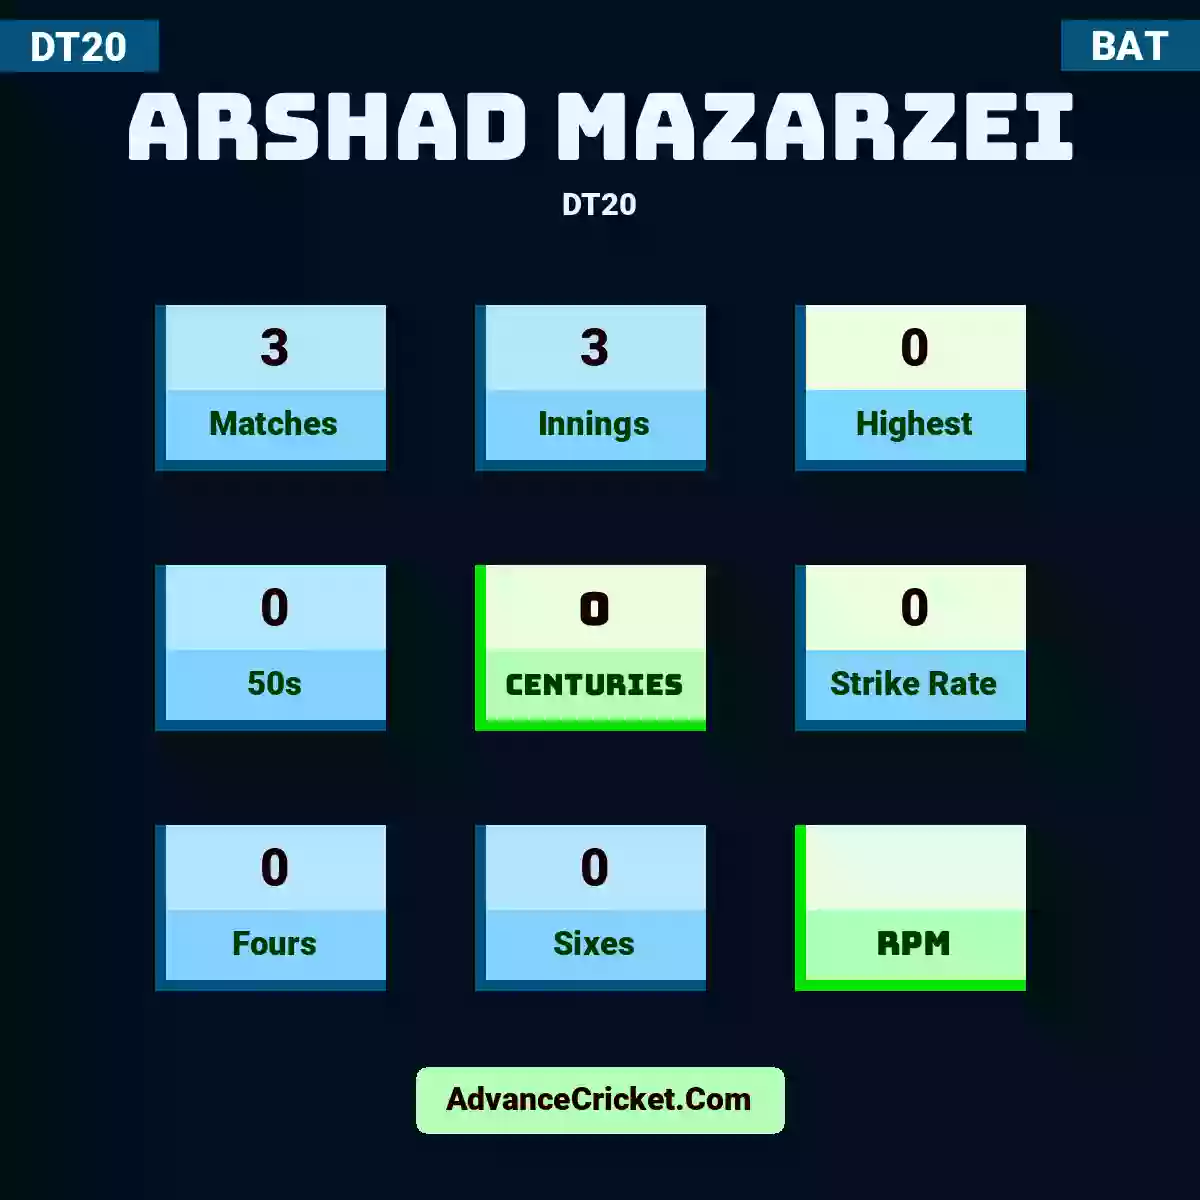 Arshad Mazarzei DT20 , Arshad Mazarzei played 3 matches, scored 0 runs as highest, 0 half-centuries, and 0 centuries, with a strike rate of 0. A.Mazarzei hit 0 fours and 0 sixes.